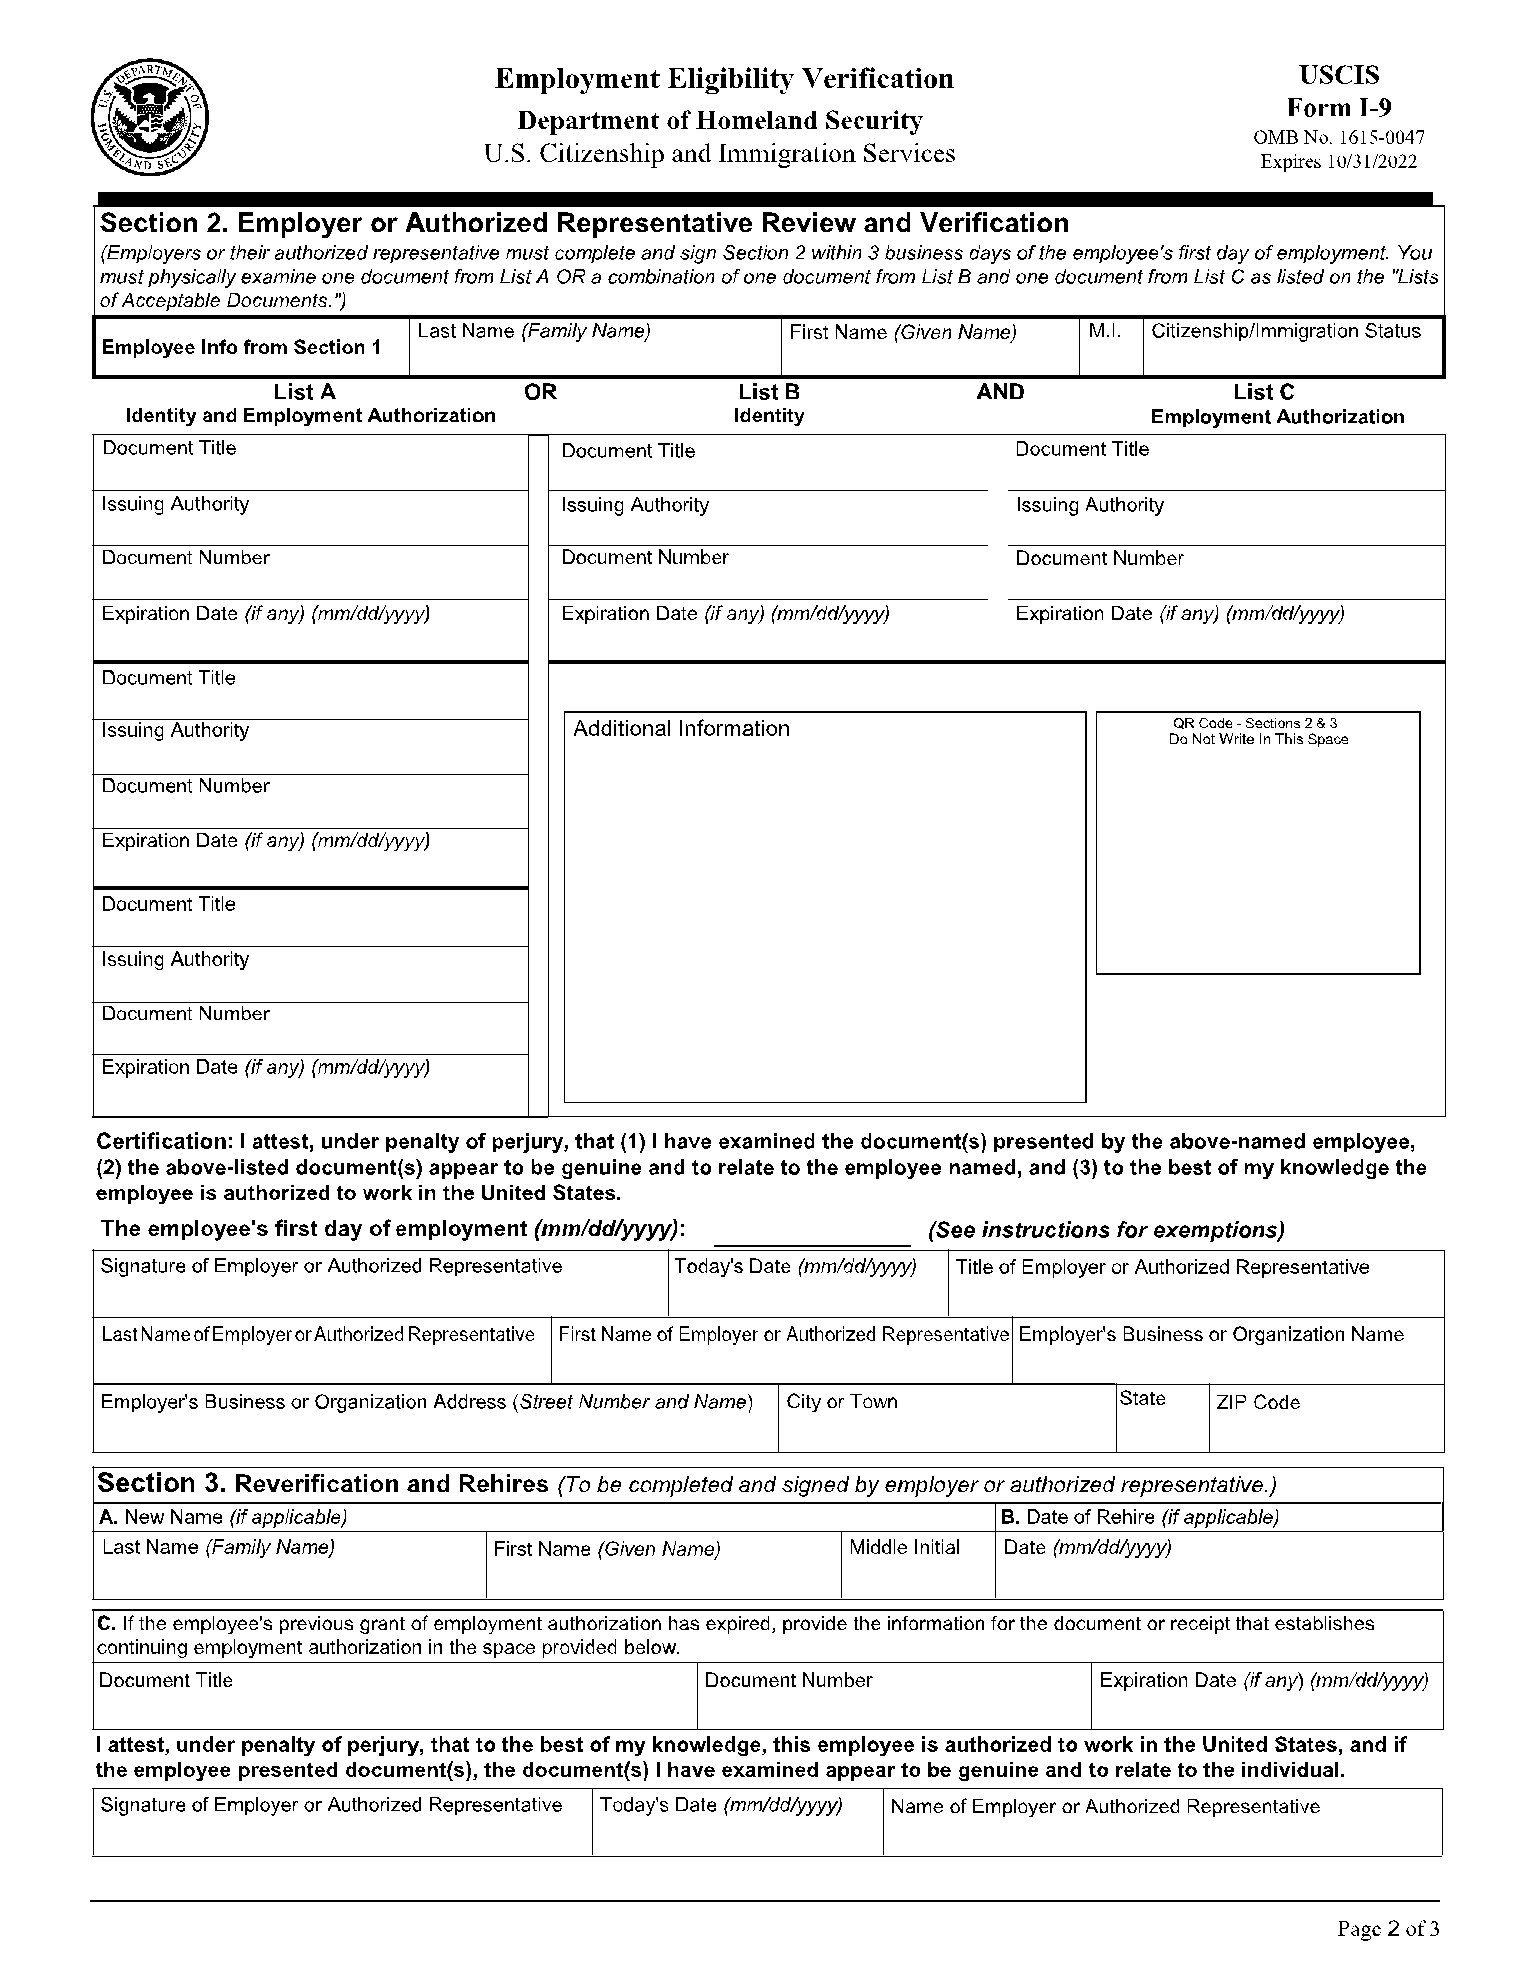 I-9 Form PDF 2